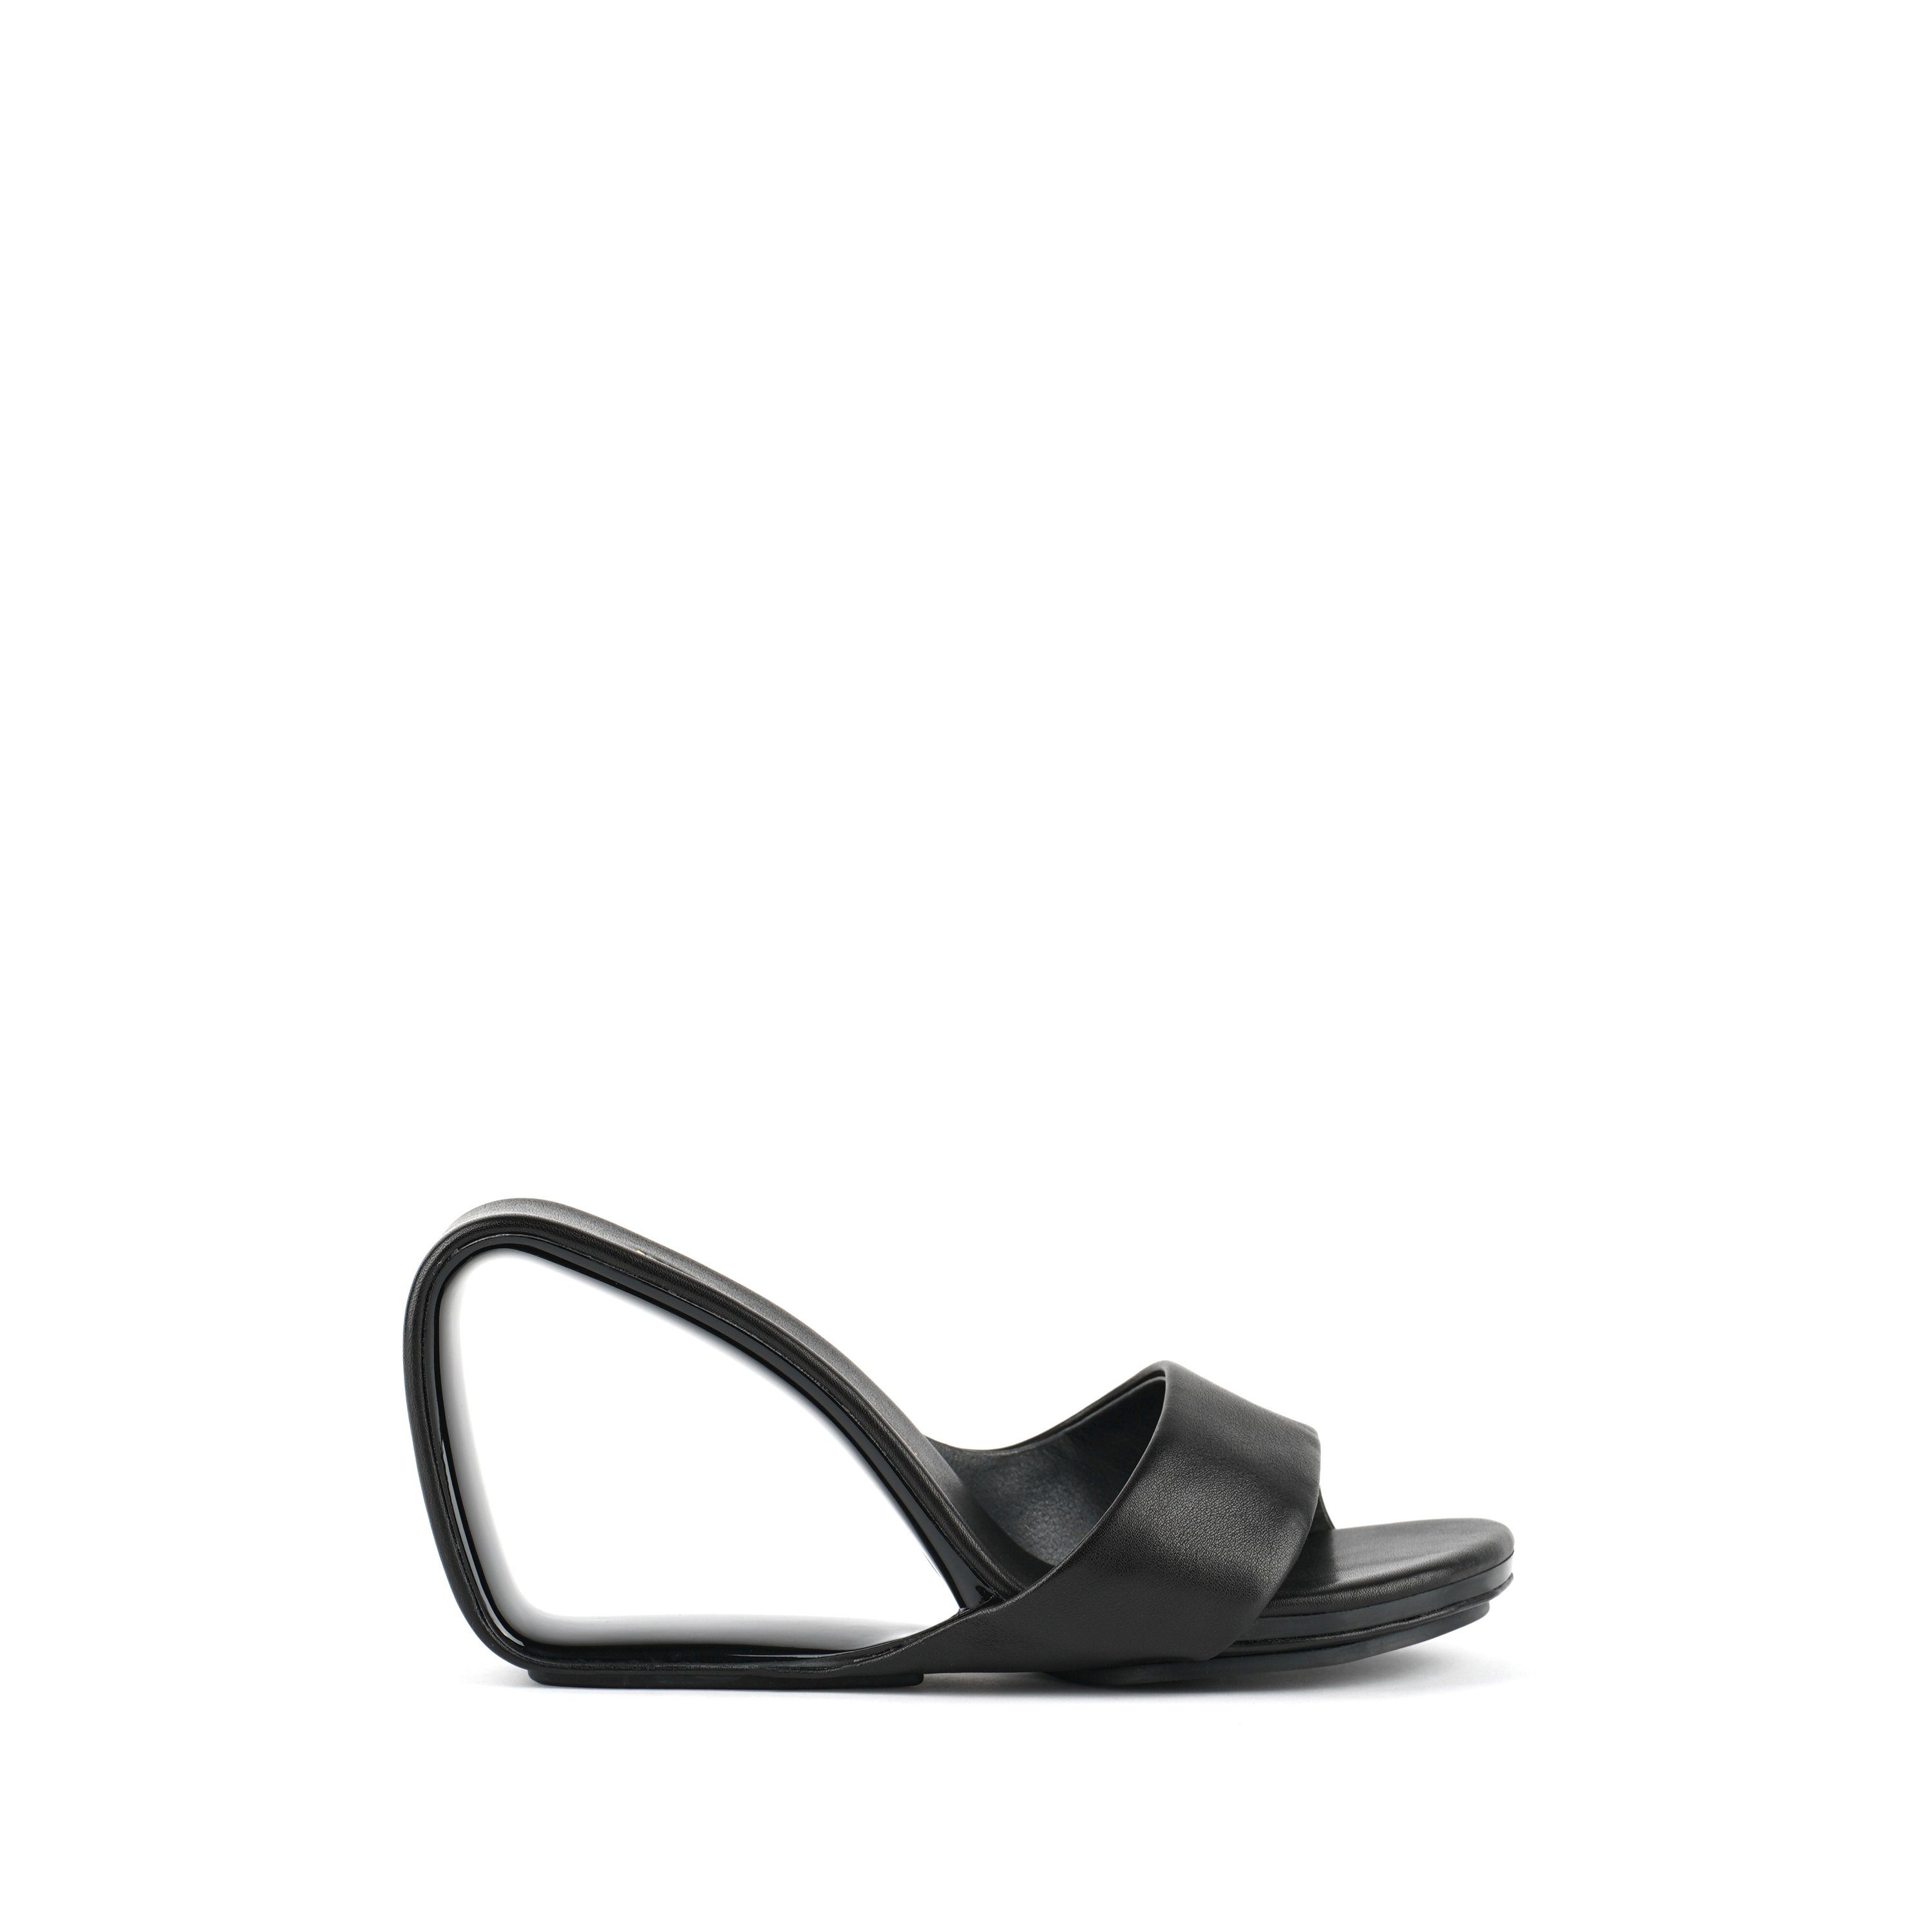 United Nude® »Mobius Hi« Sandale online kaufen | OTTO